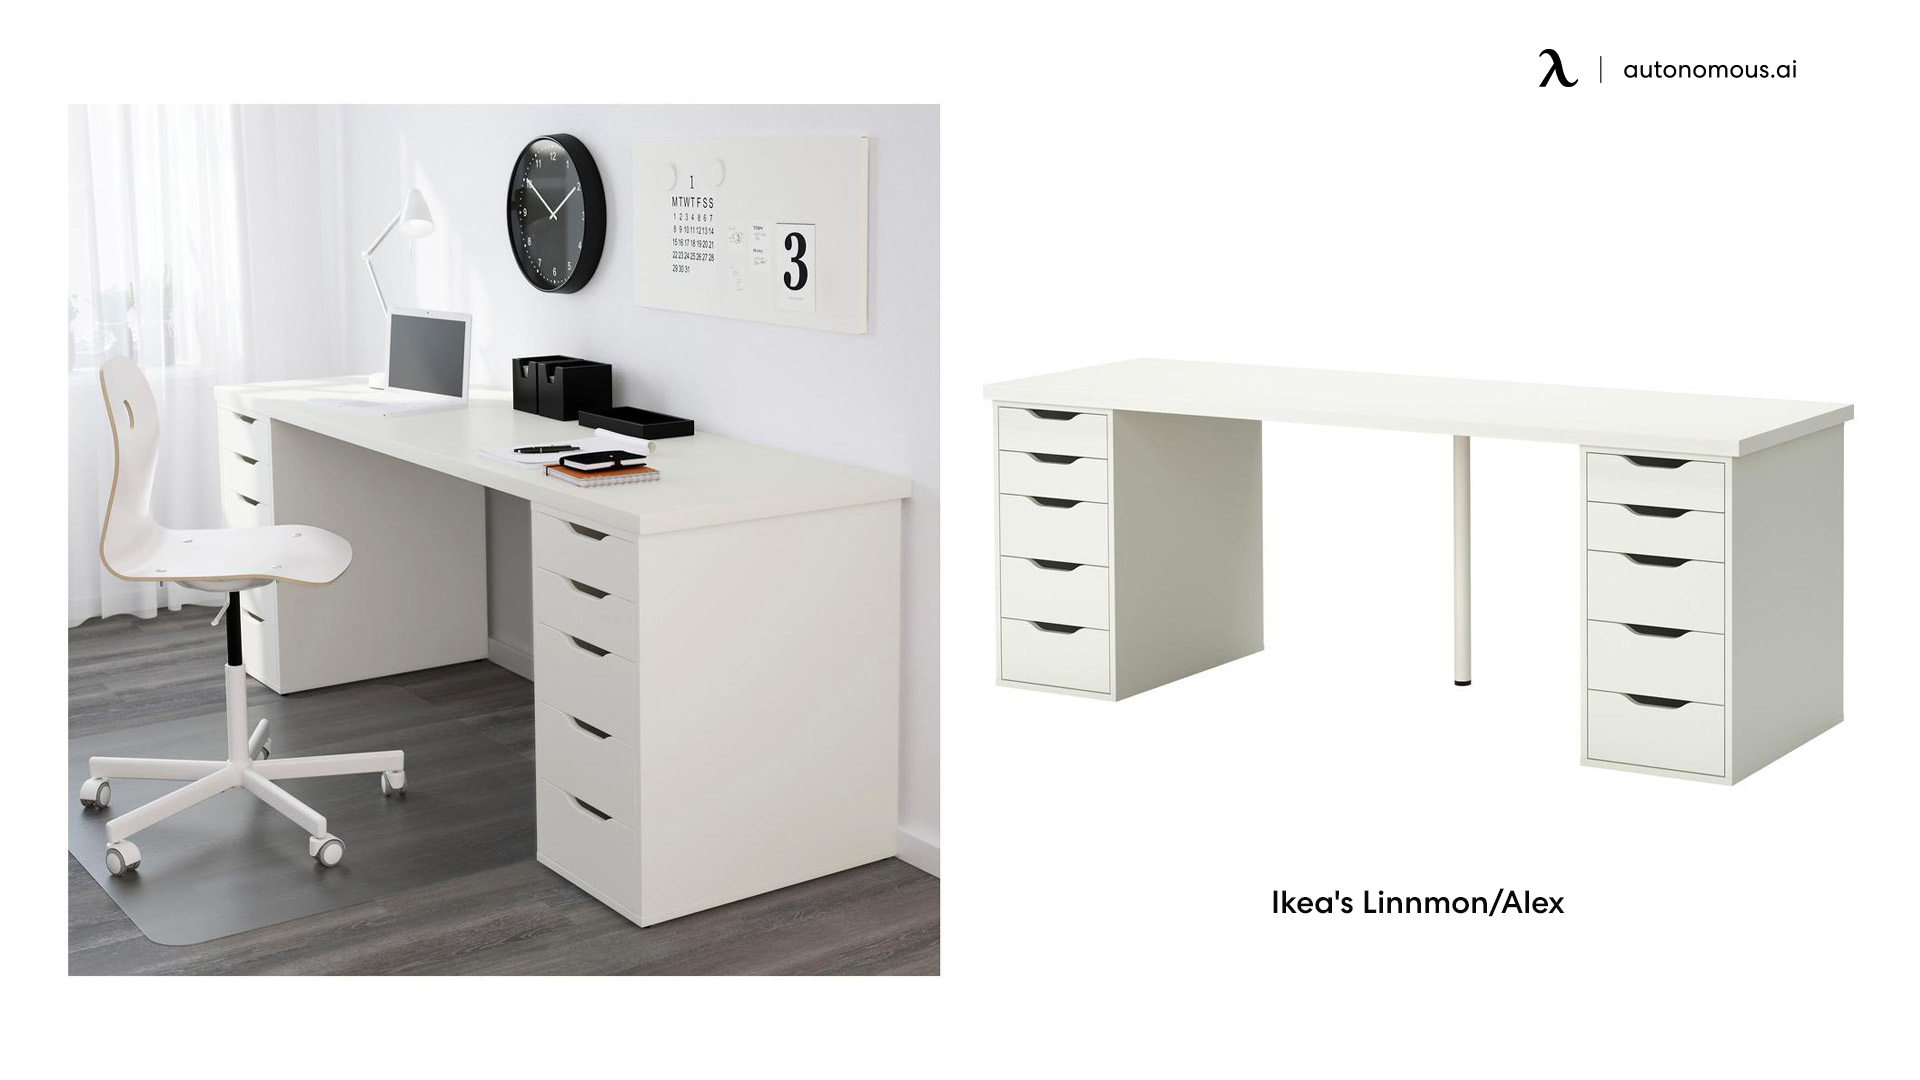 Ikea's Linnmon/Alex tech desk